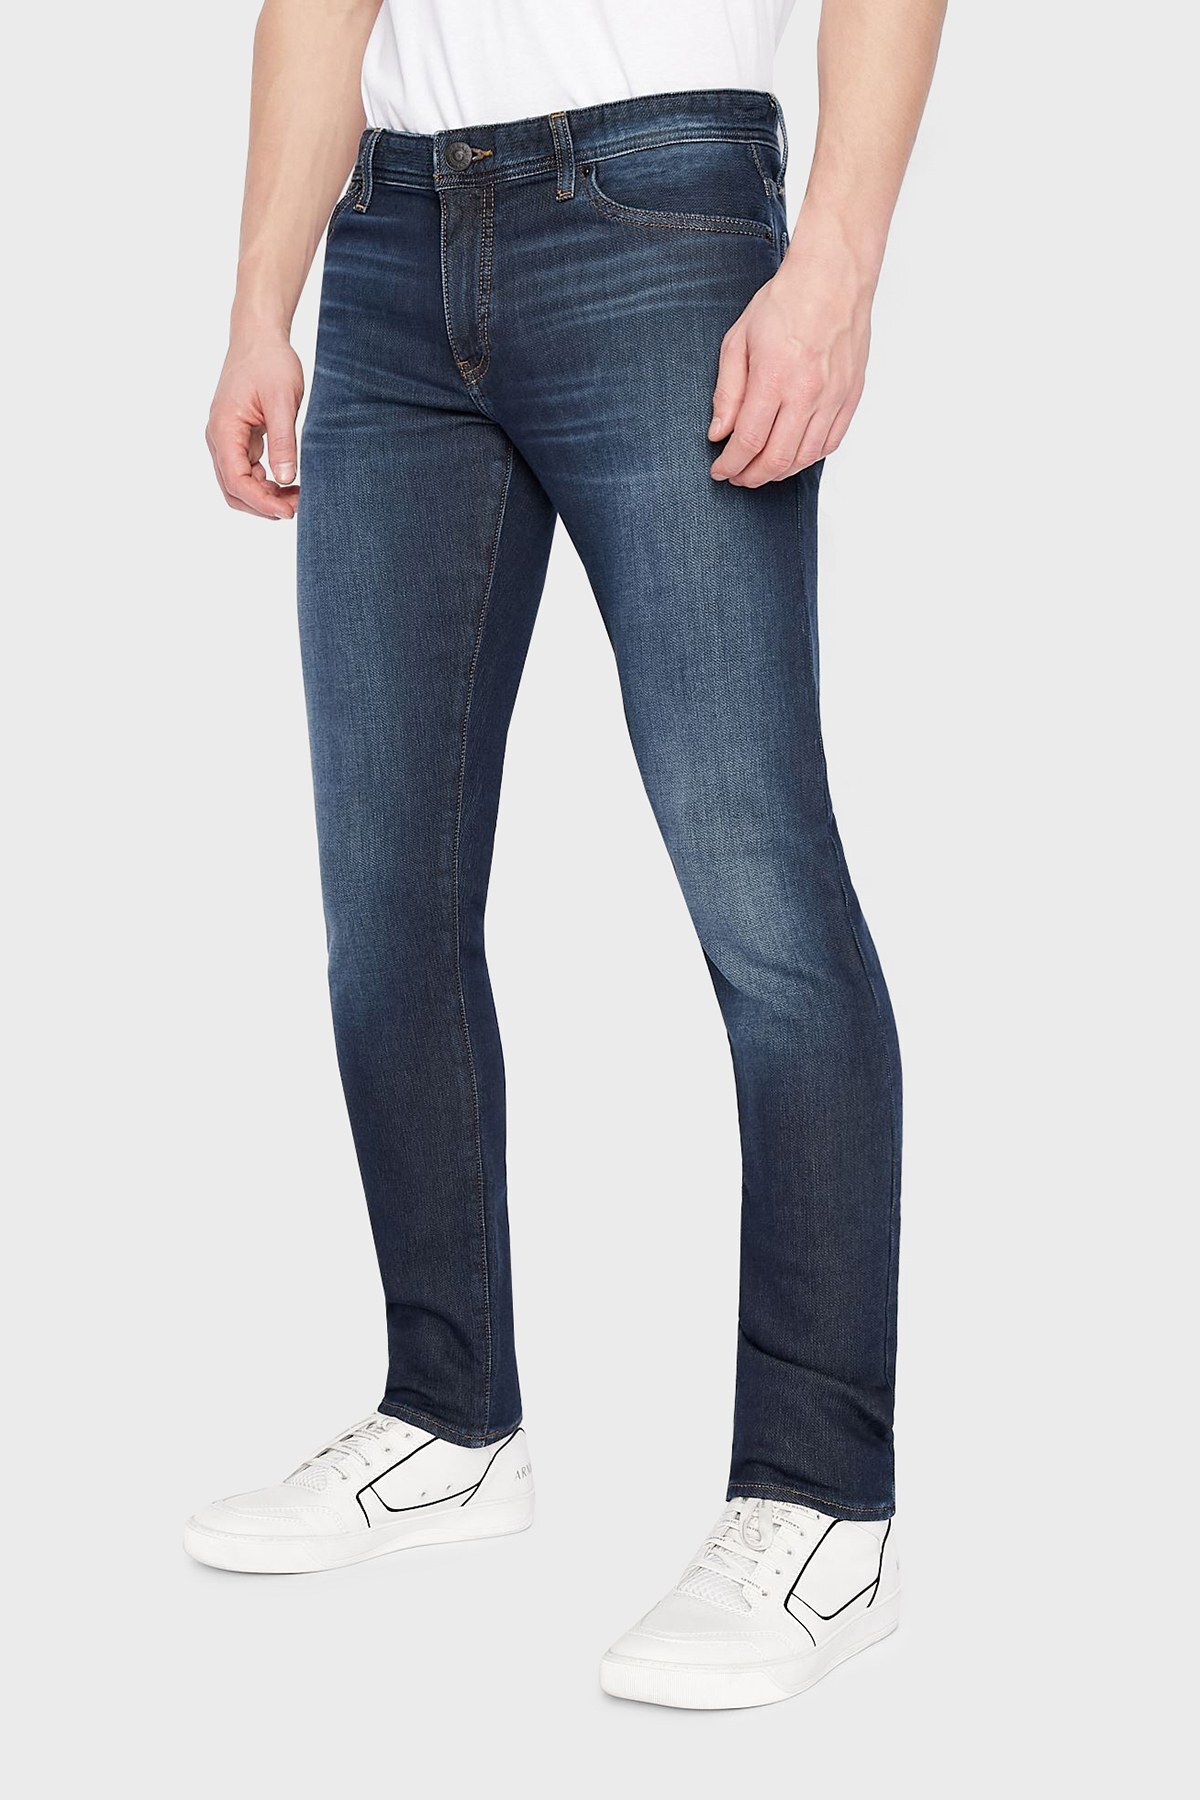 Armani Exchange J14 Pamuklu Normal Bel Skinny Fit Jeans Erkek Kot Pantolon 3LZJ14 Z2P6Z 1500 İNDİGO